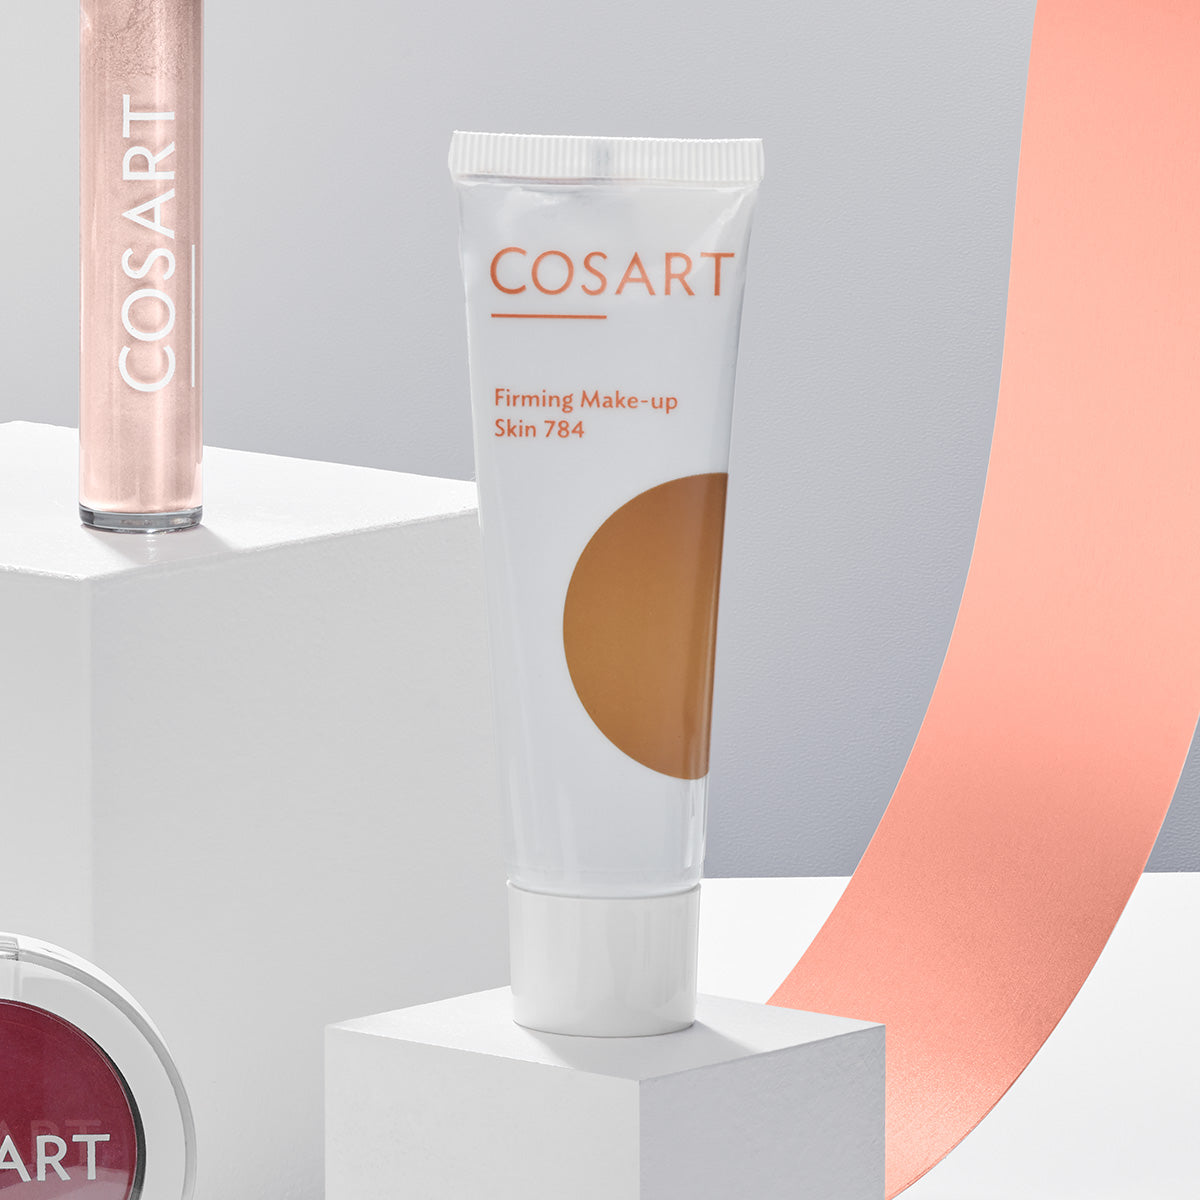 Cosart Firming Make-up